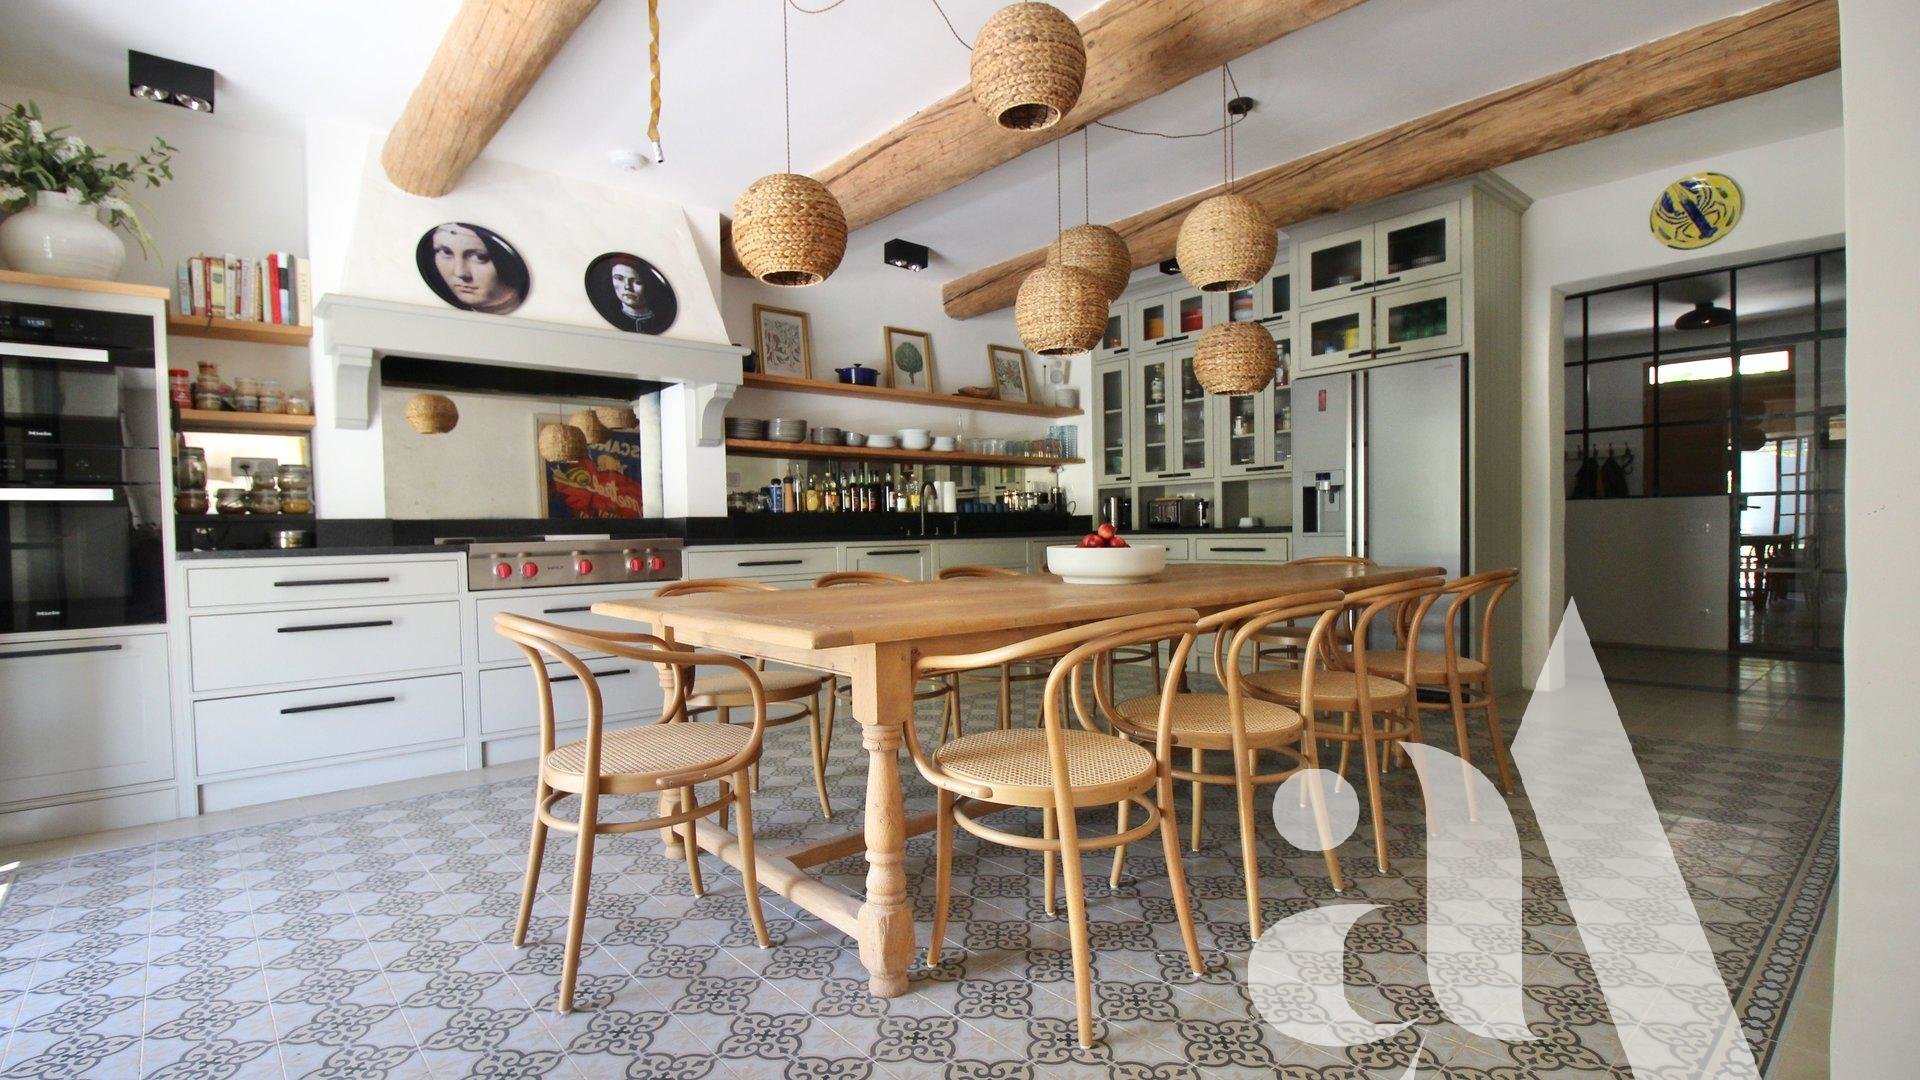 Kitchen Tile Kitchen bar